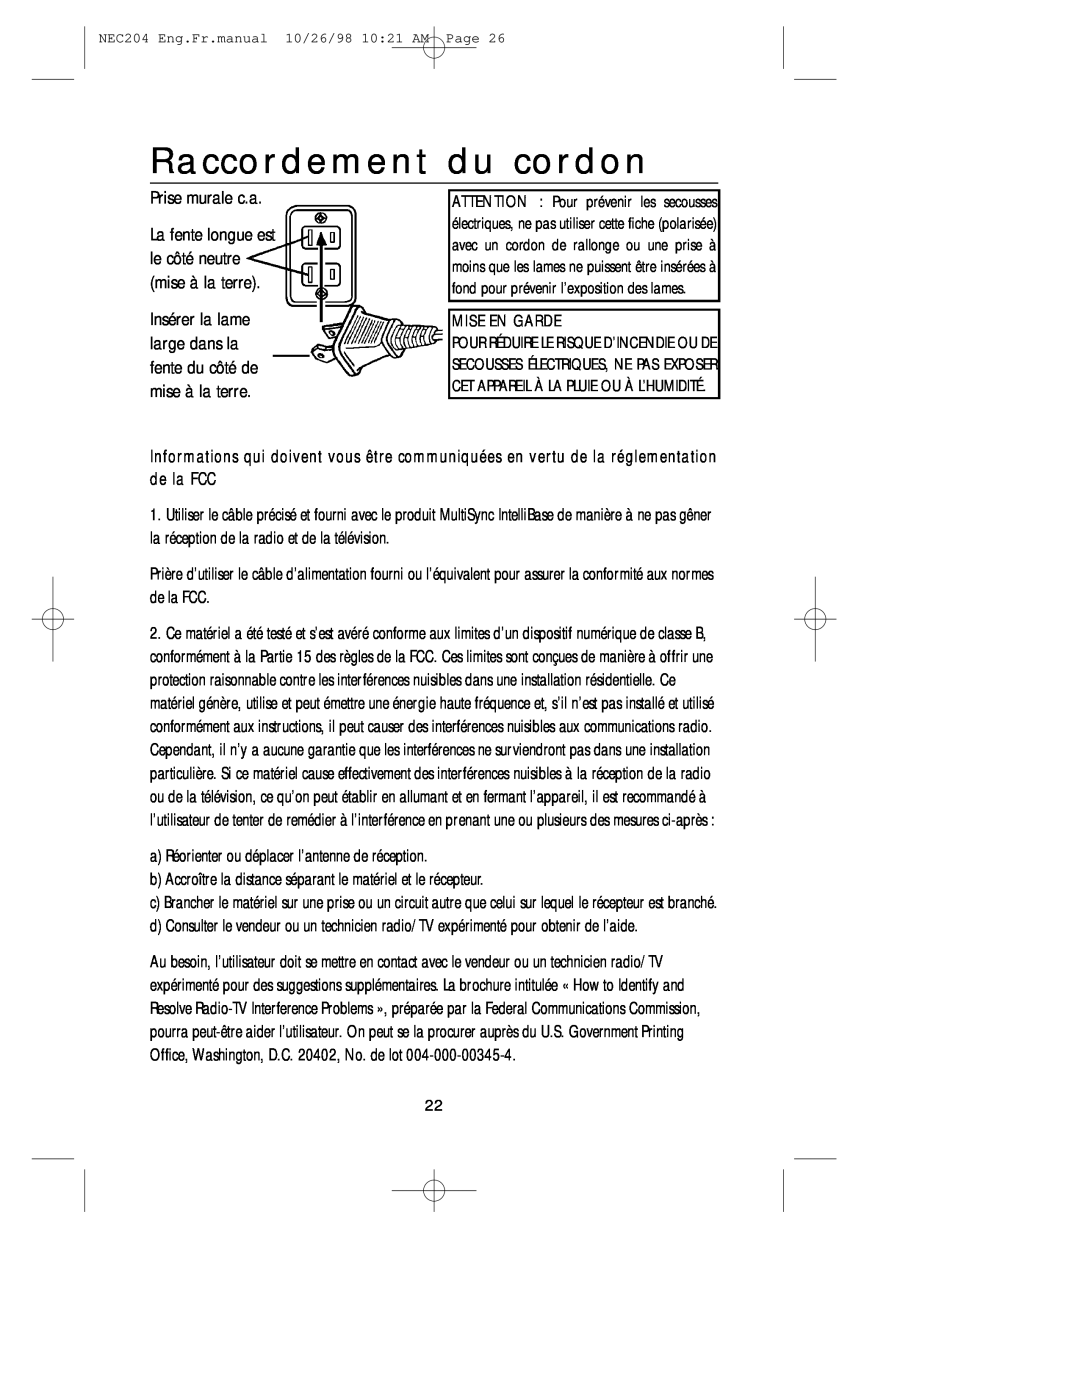 NEC IB-USB, A3844 user manual Raccordement du cordon 